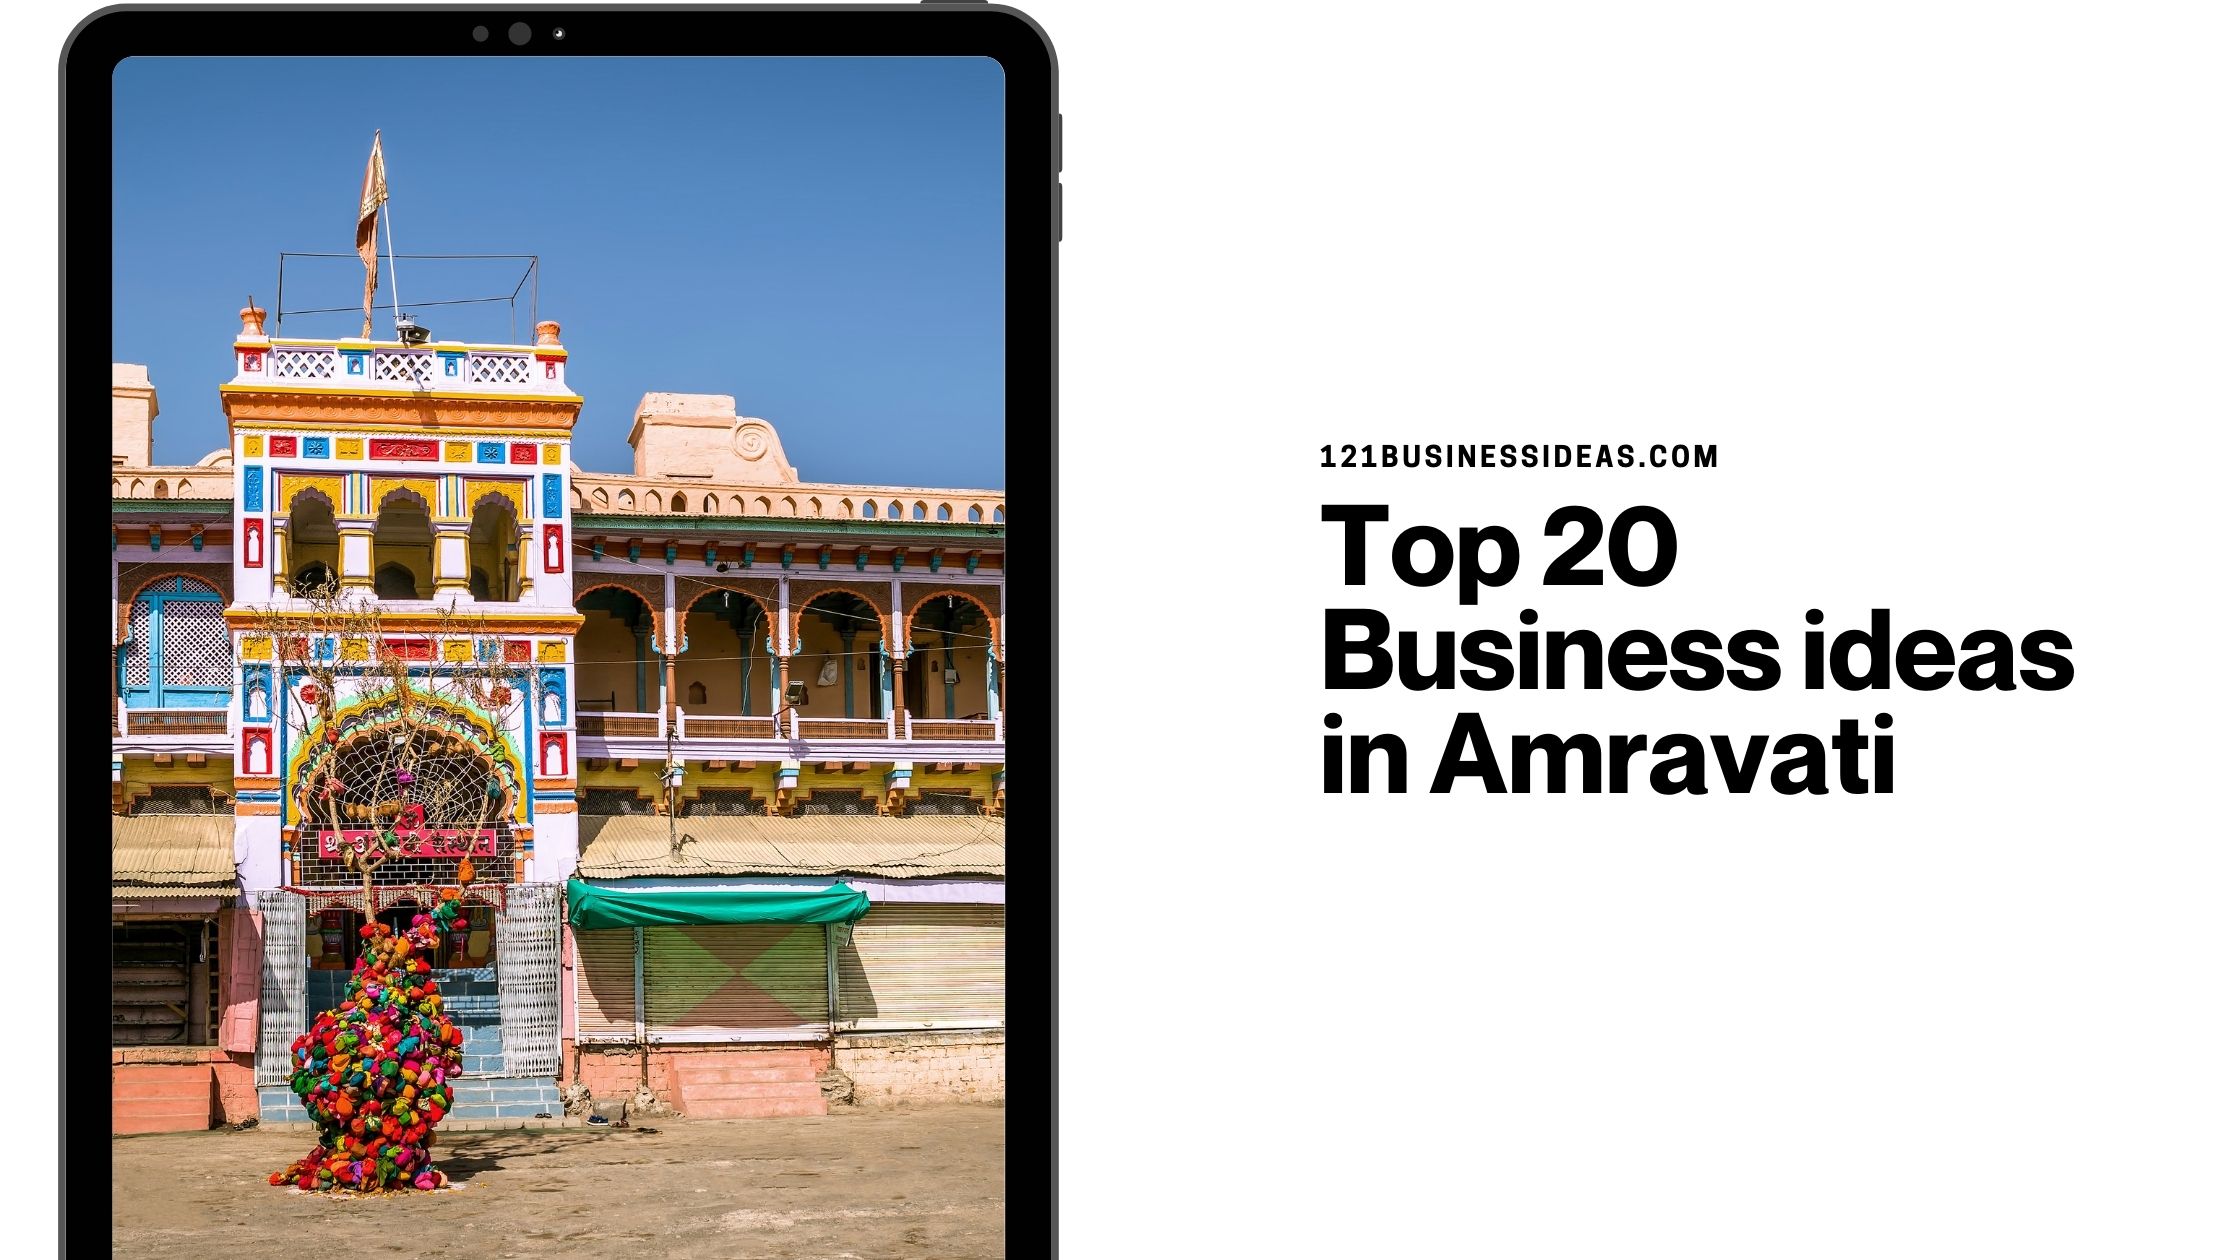 Top 20 Business ideas in Amravati 2